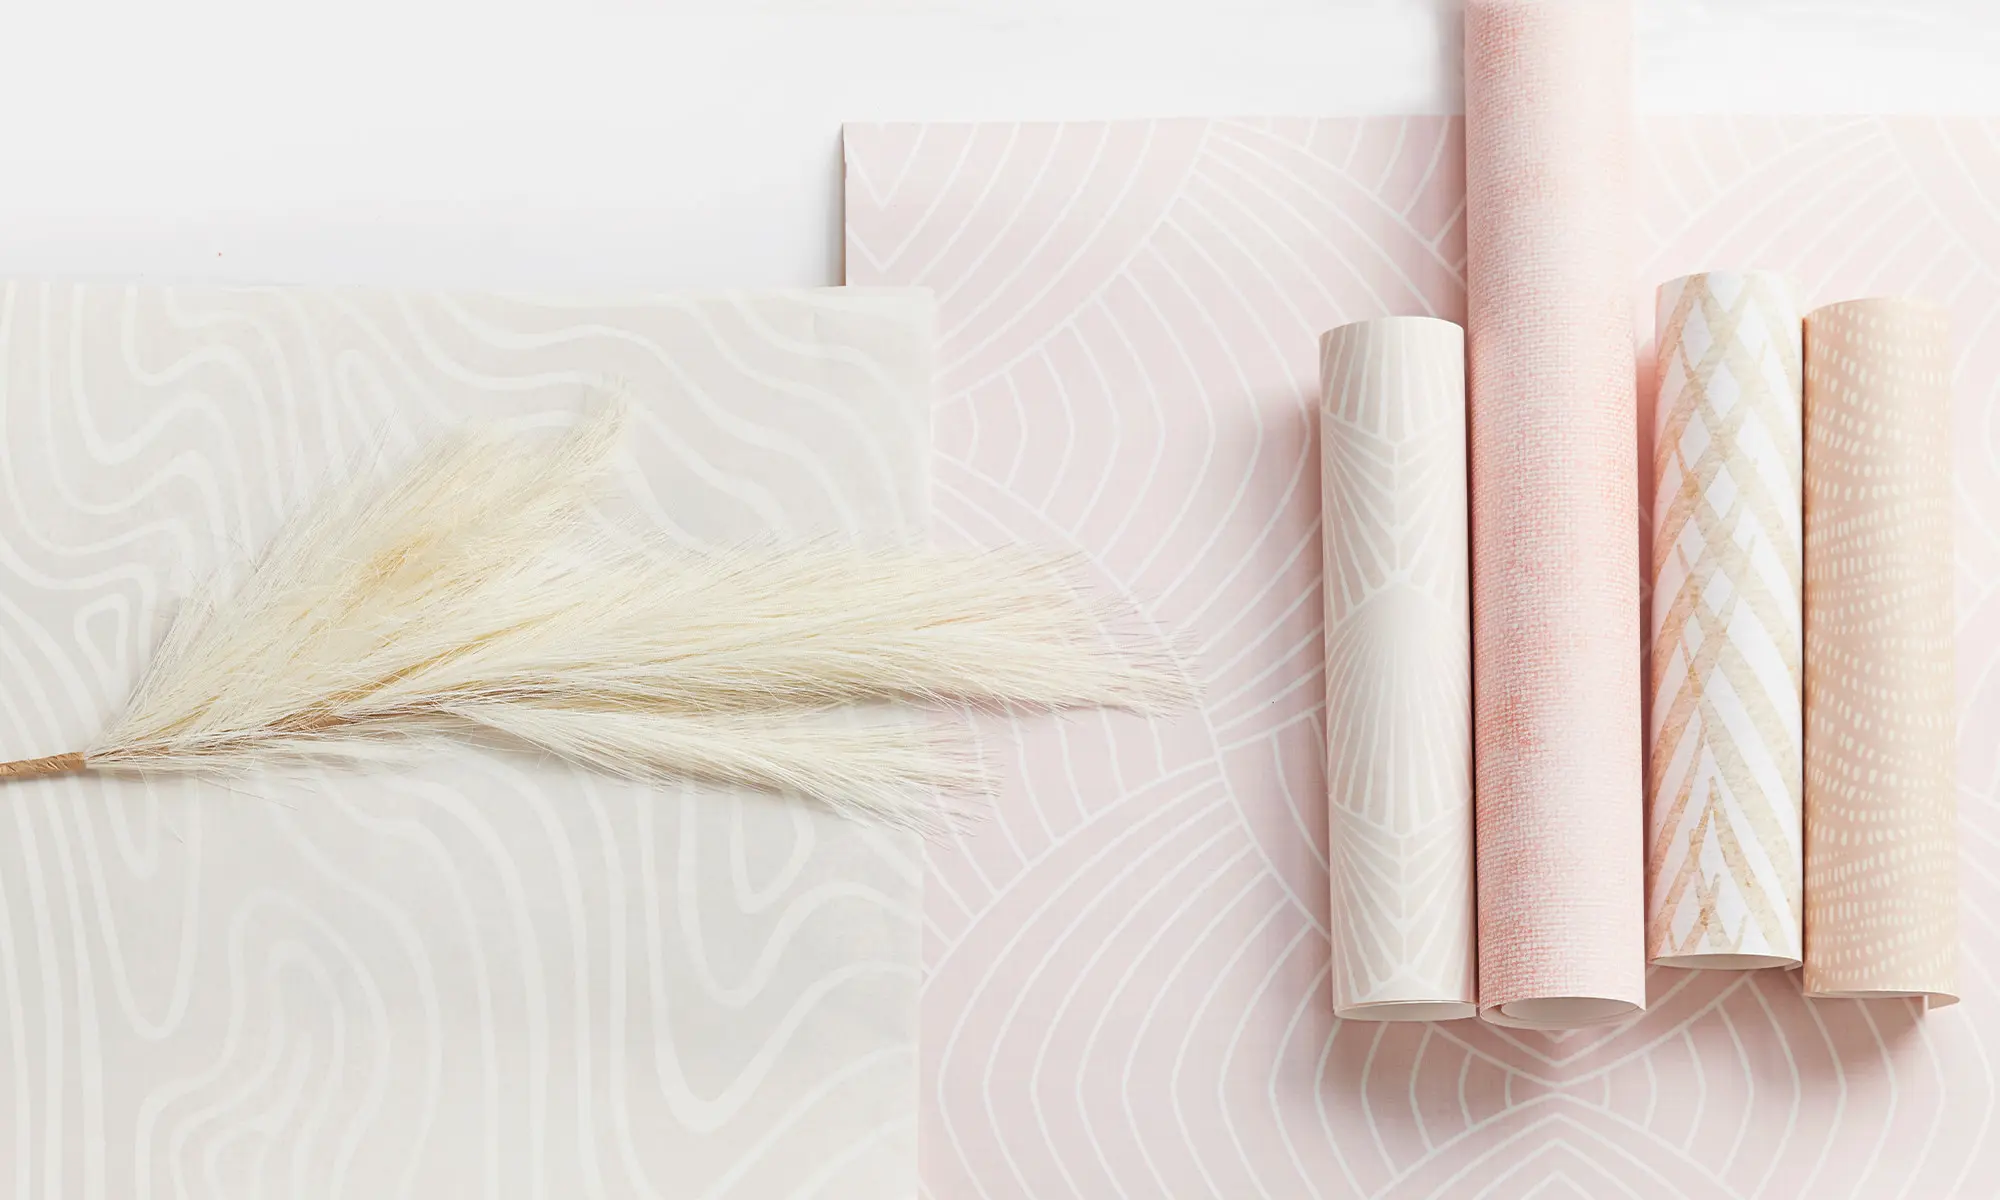 Rolls of light pink wallpaper and a dried grass.